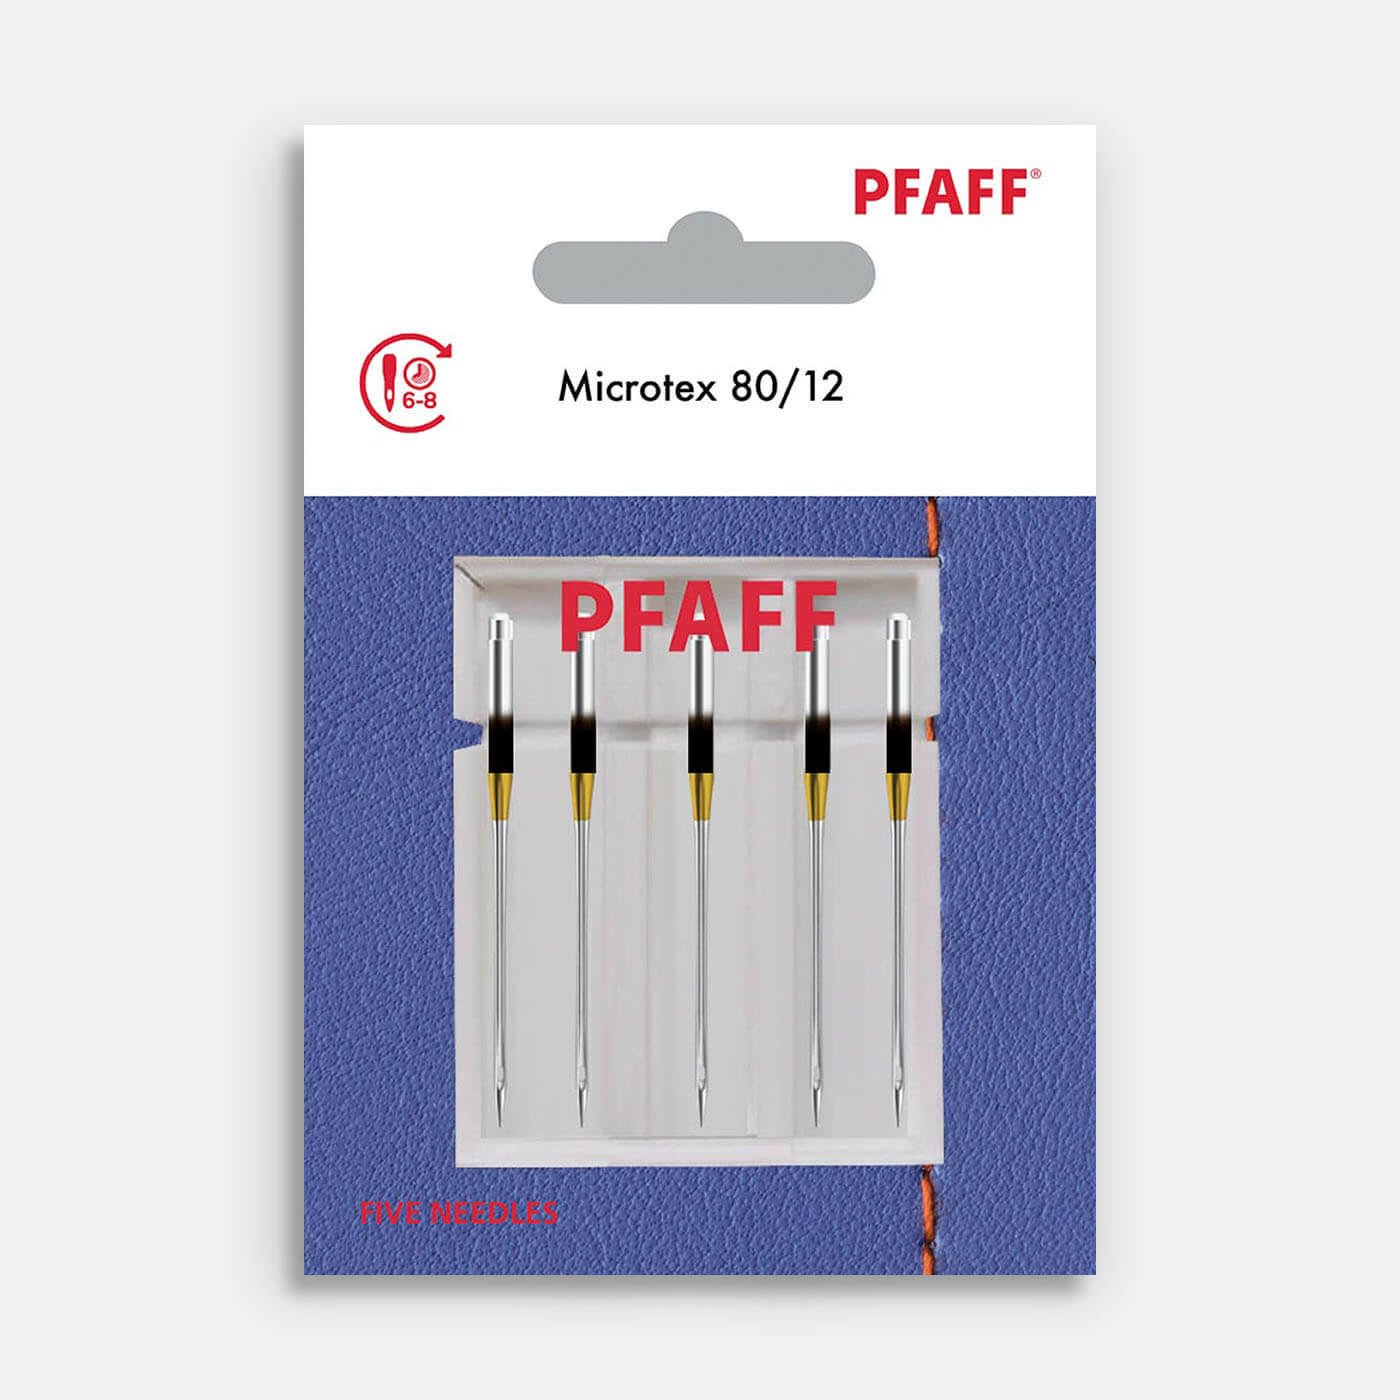 Pfaff microtex-nåler størrelse 80/12 - 5 pk